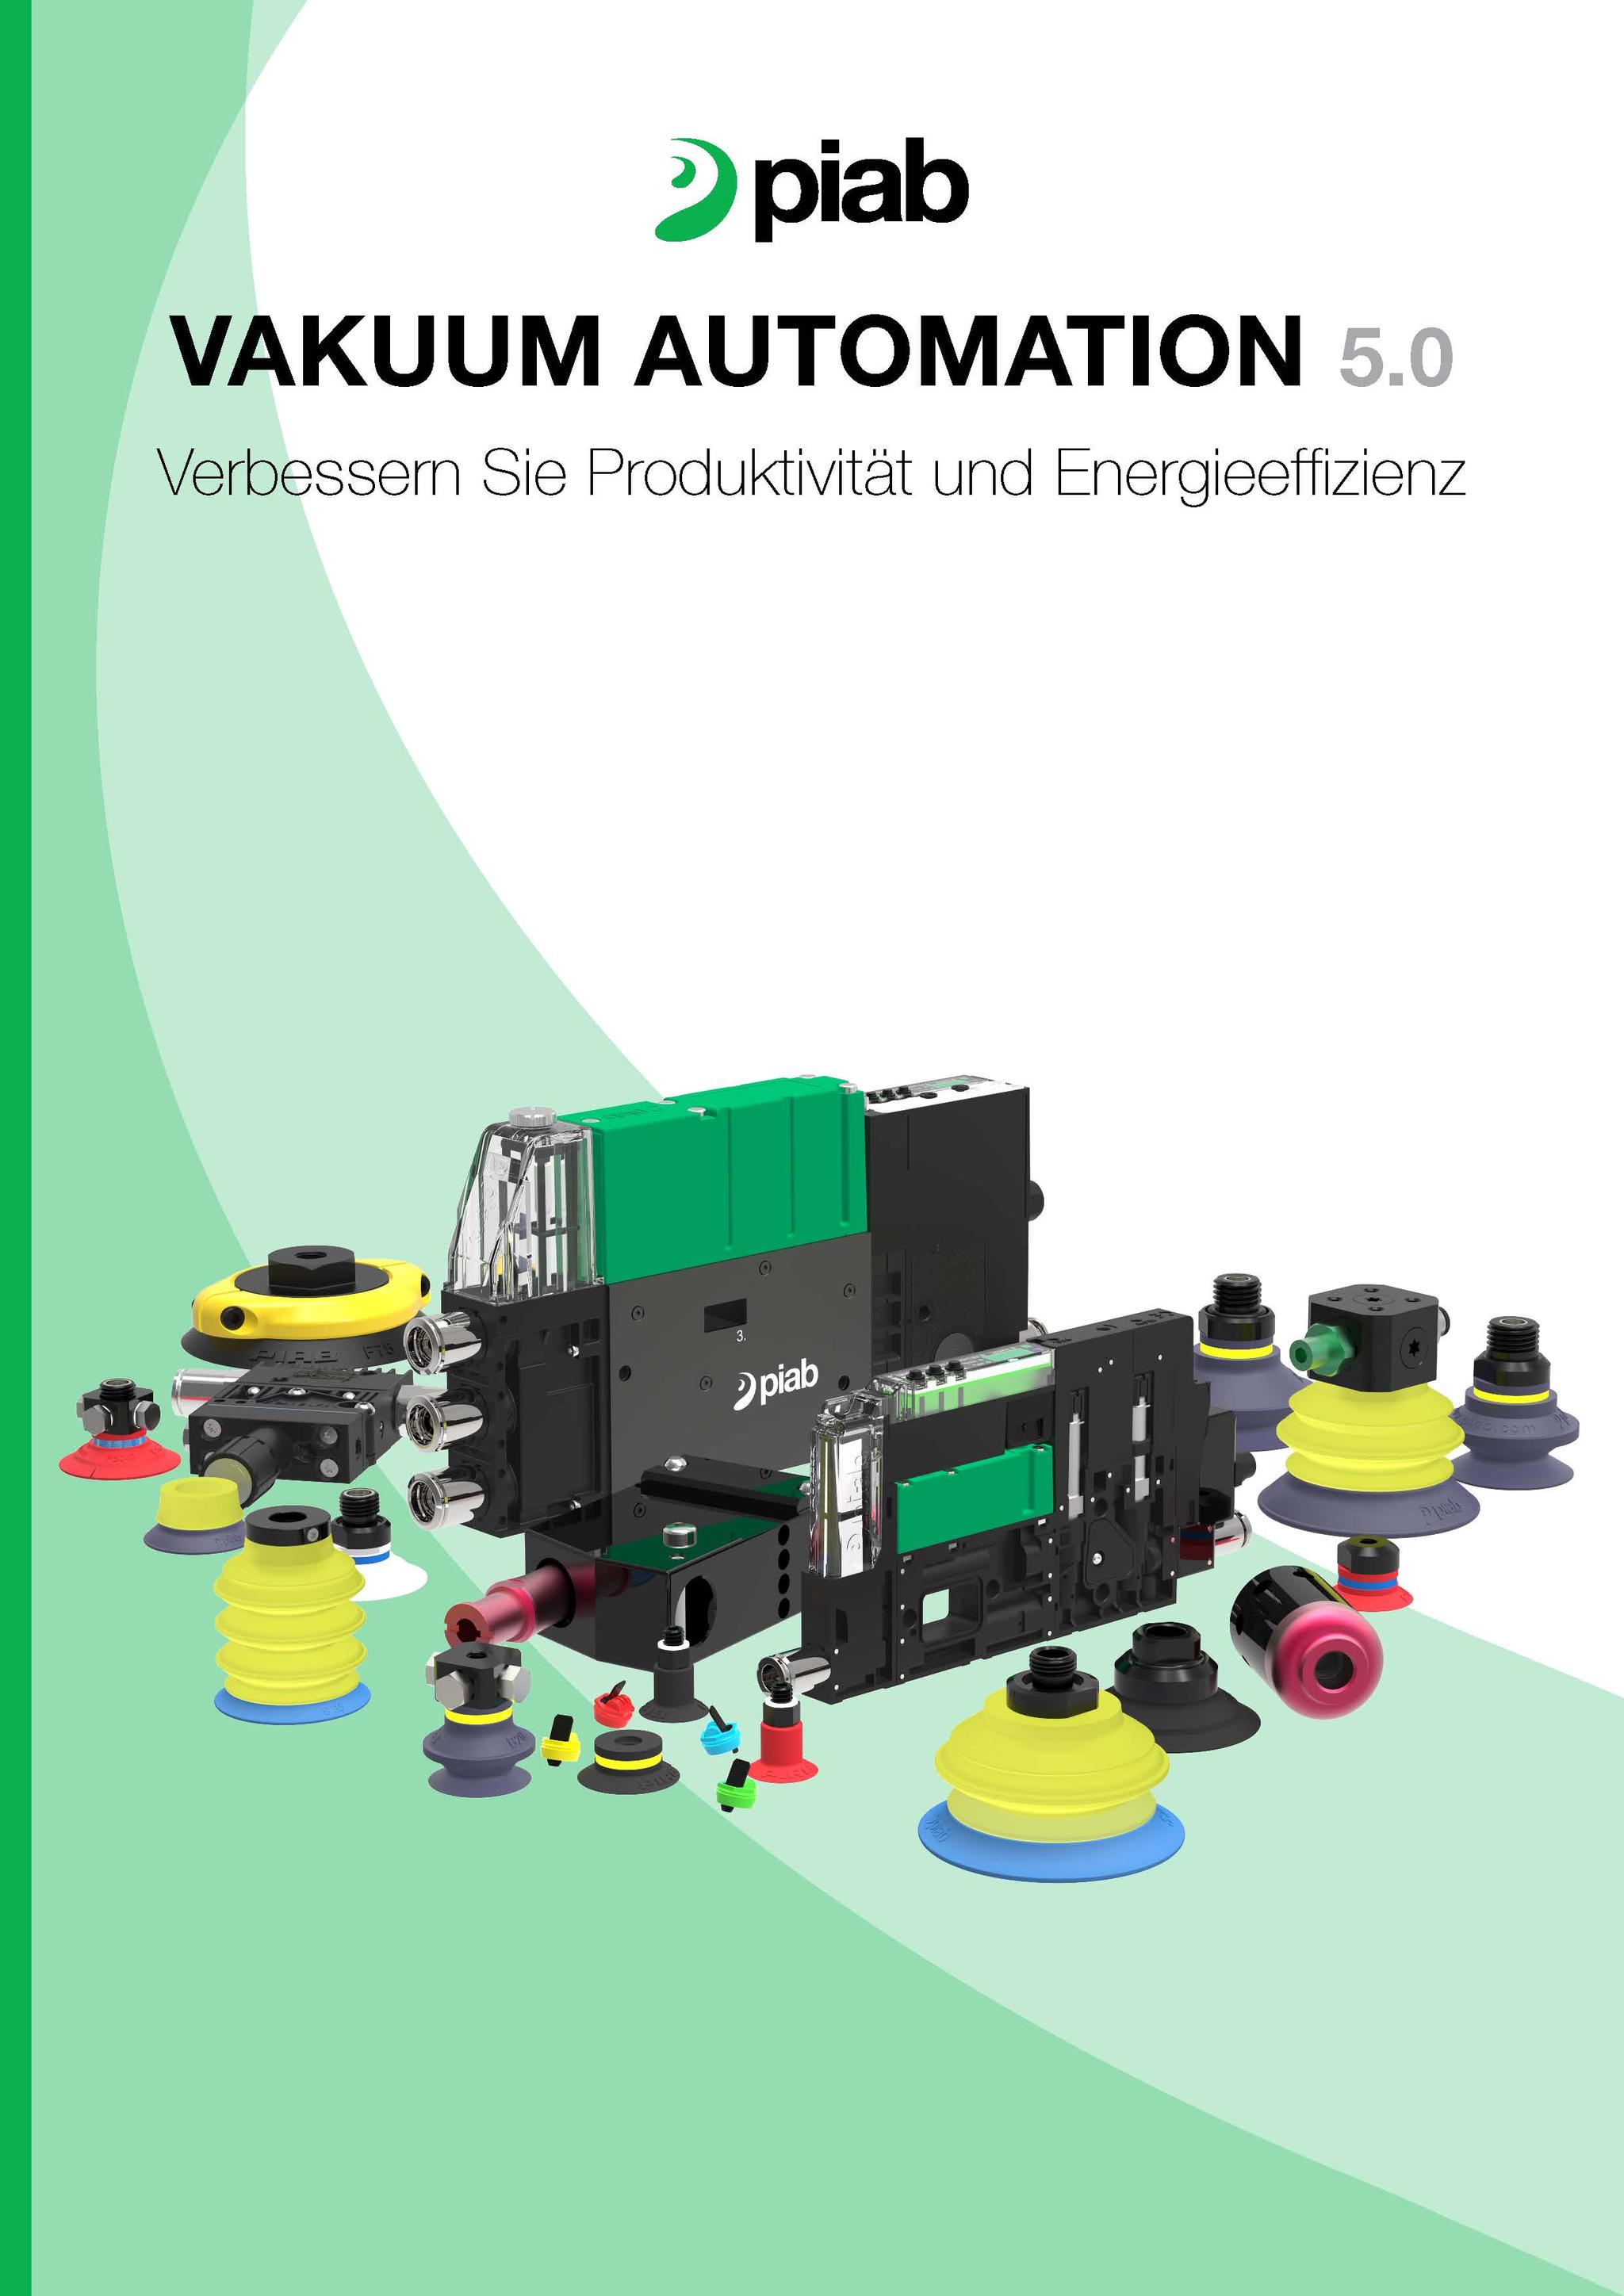 Piab Vakuum Automation Katalog